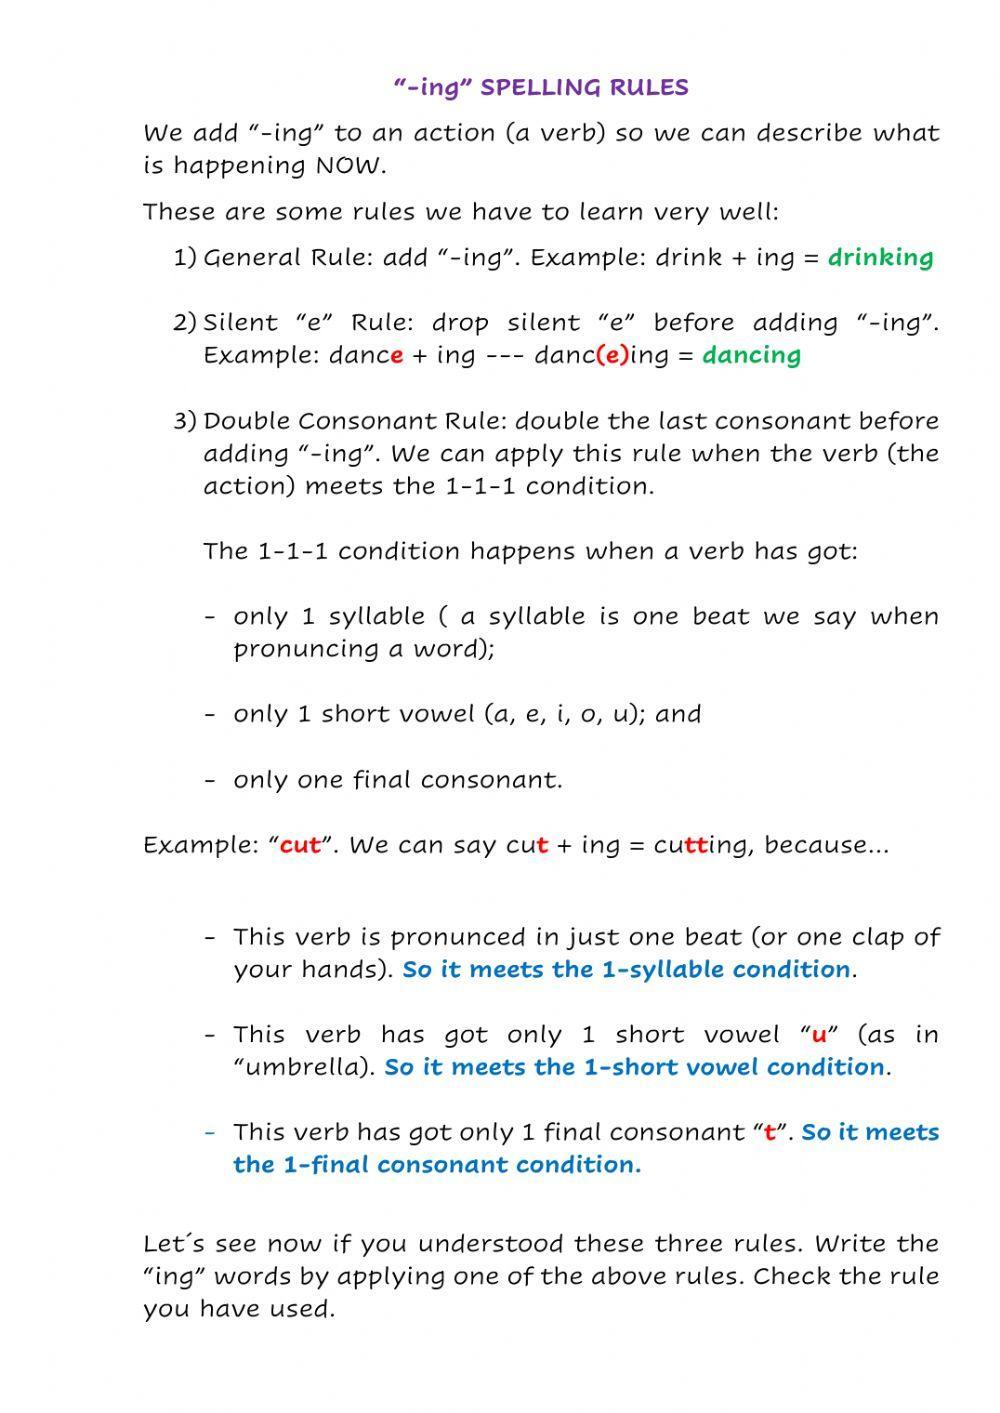 -ing- spelling rules